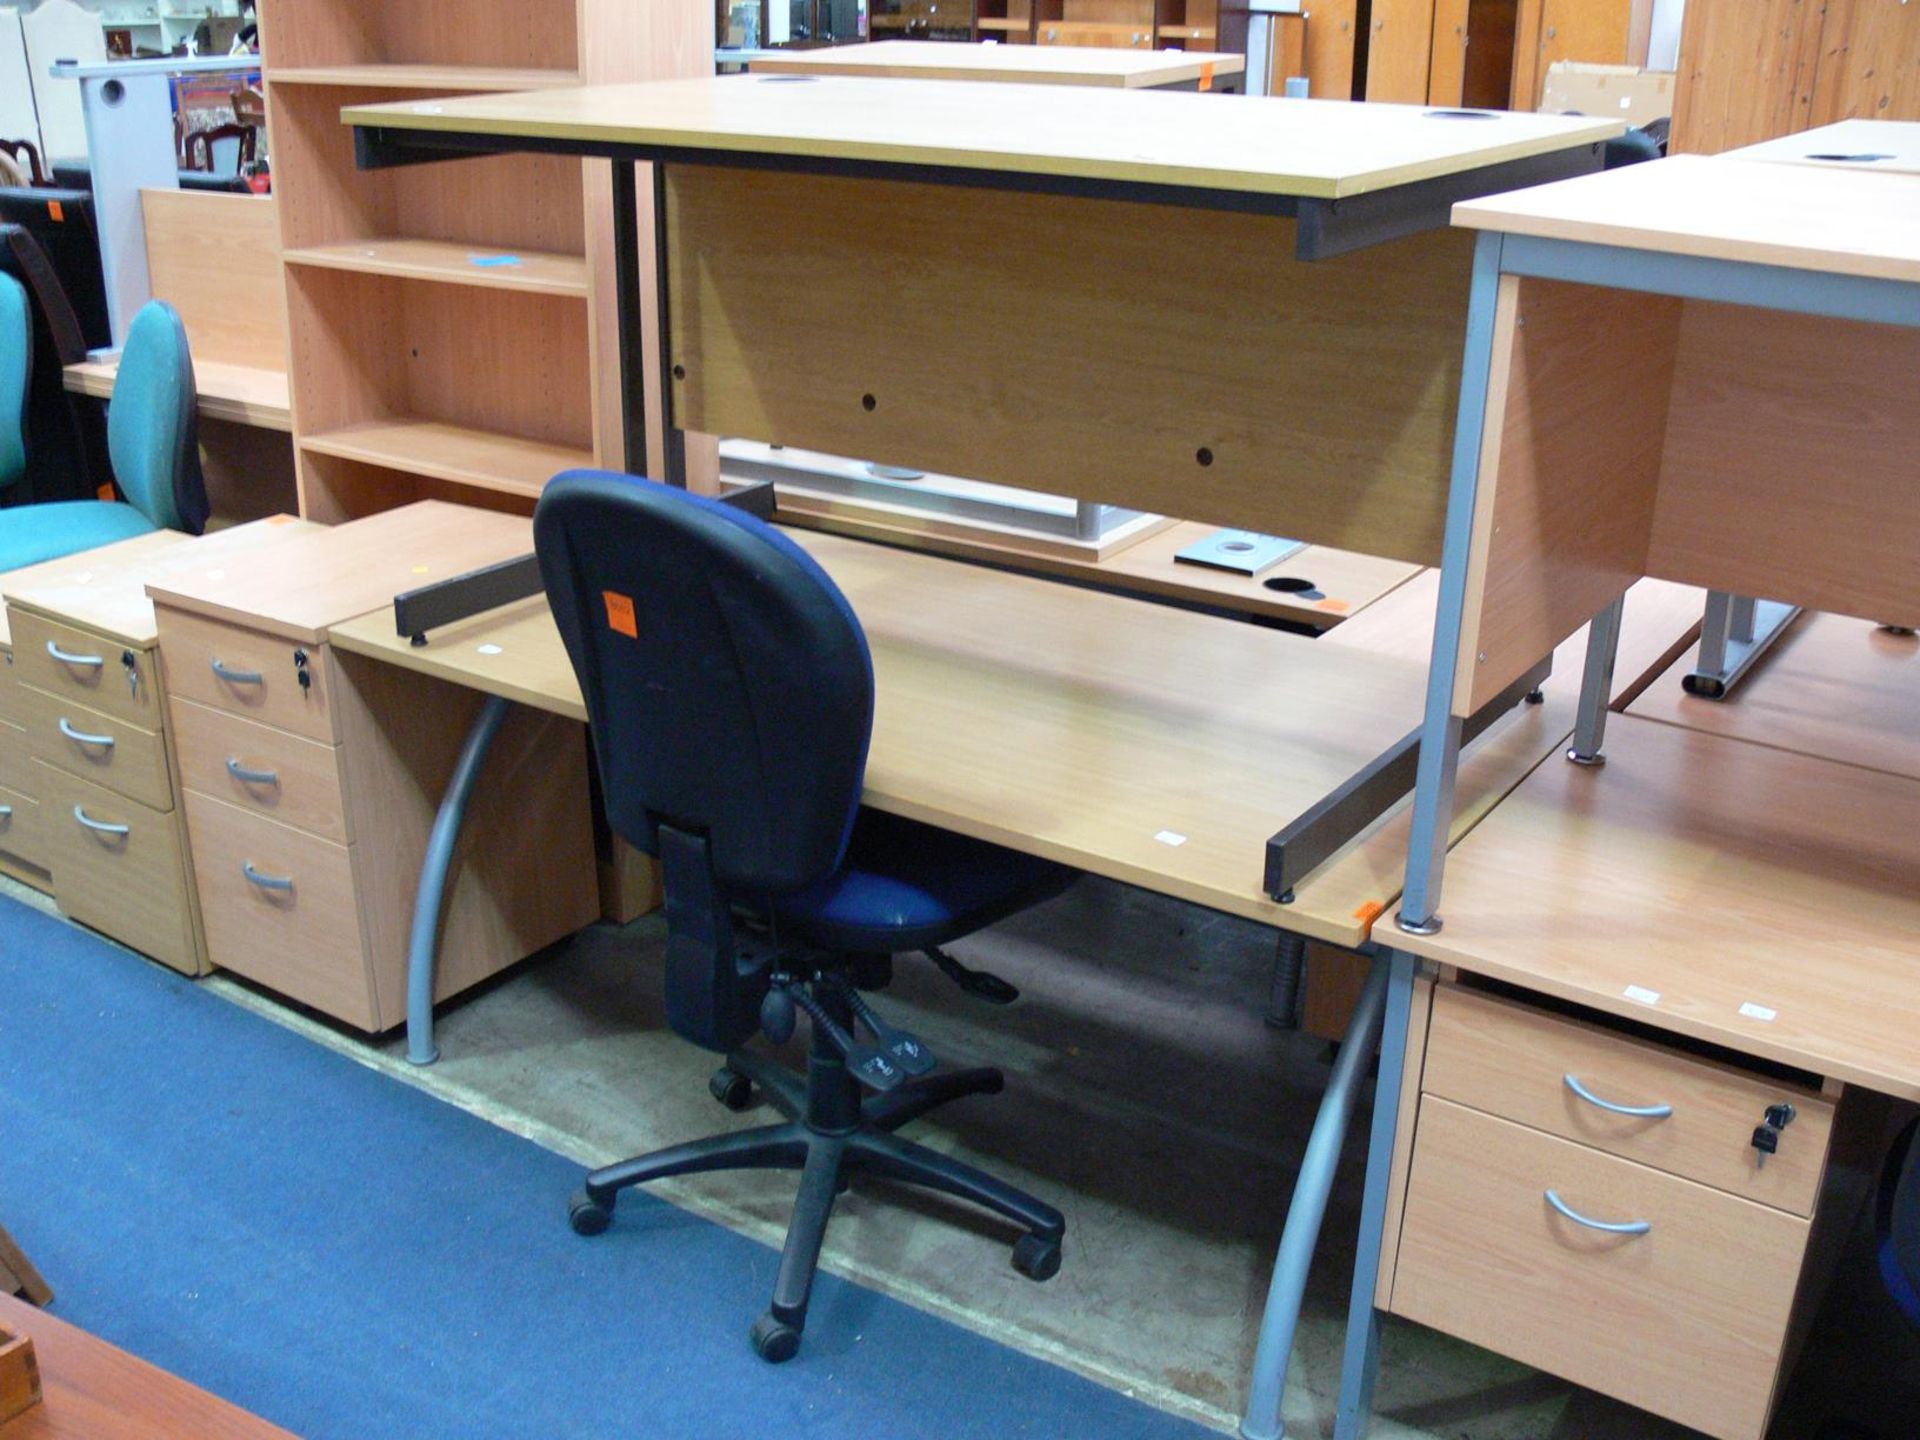 *2 x Rectangular non-matching office desks and 1 x Operators chair.